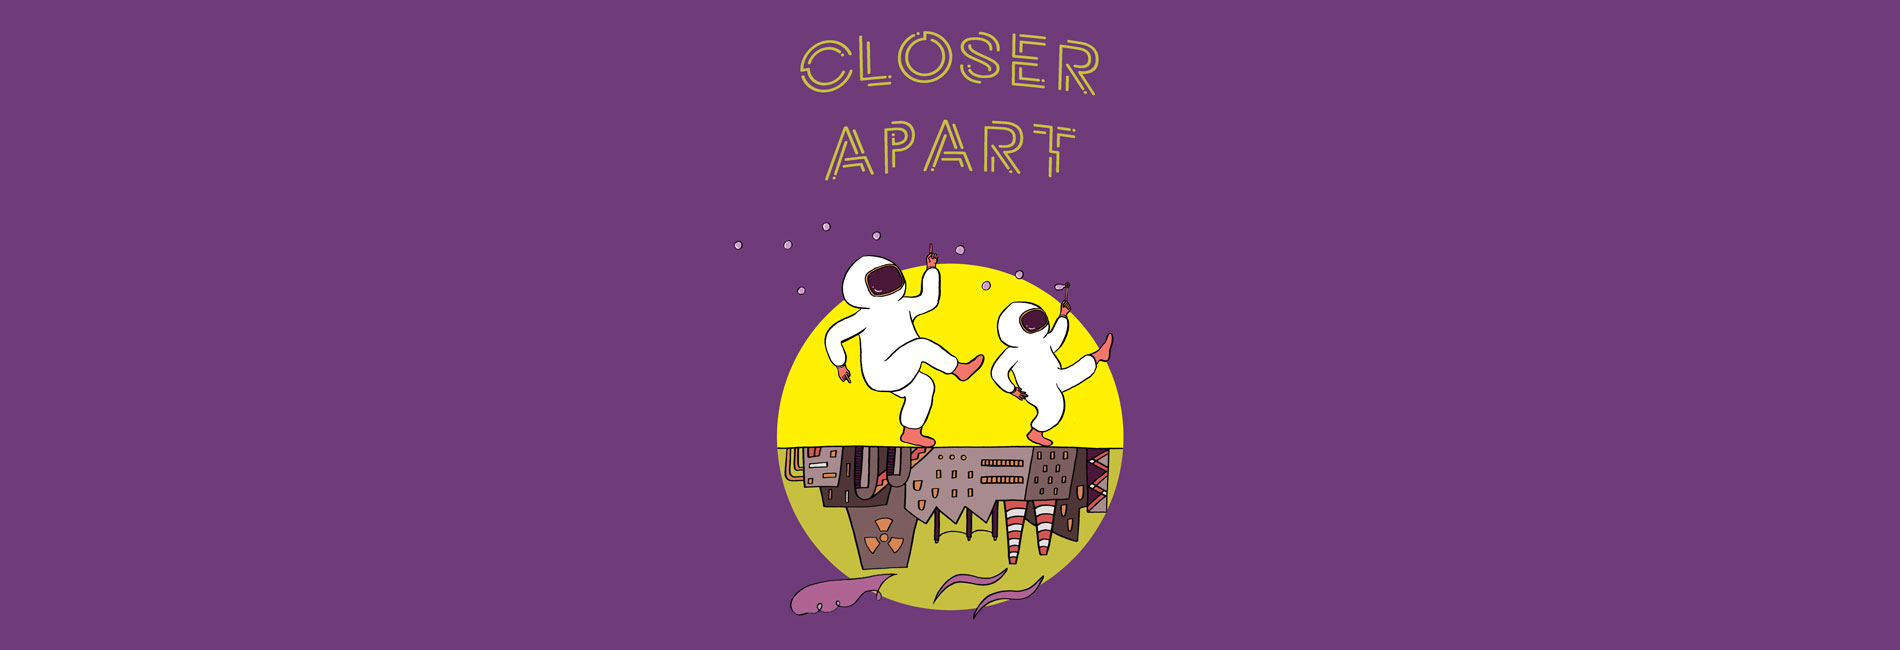 play+Ground: Closer Apart